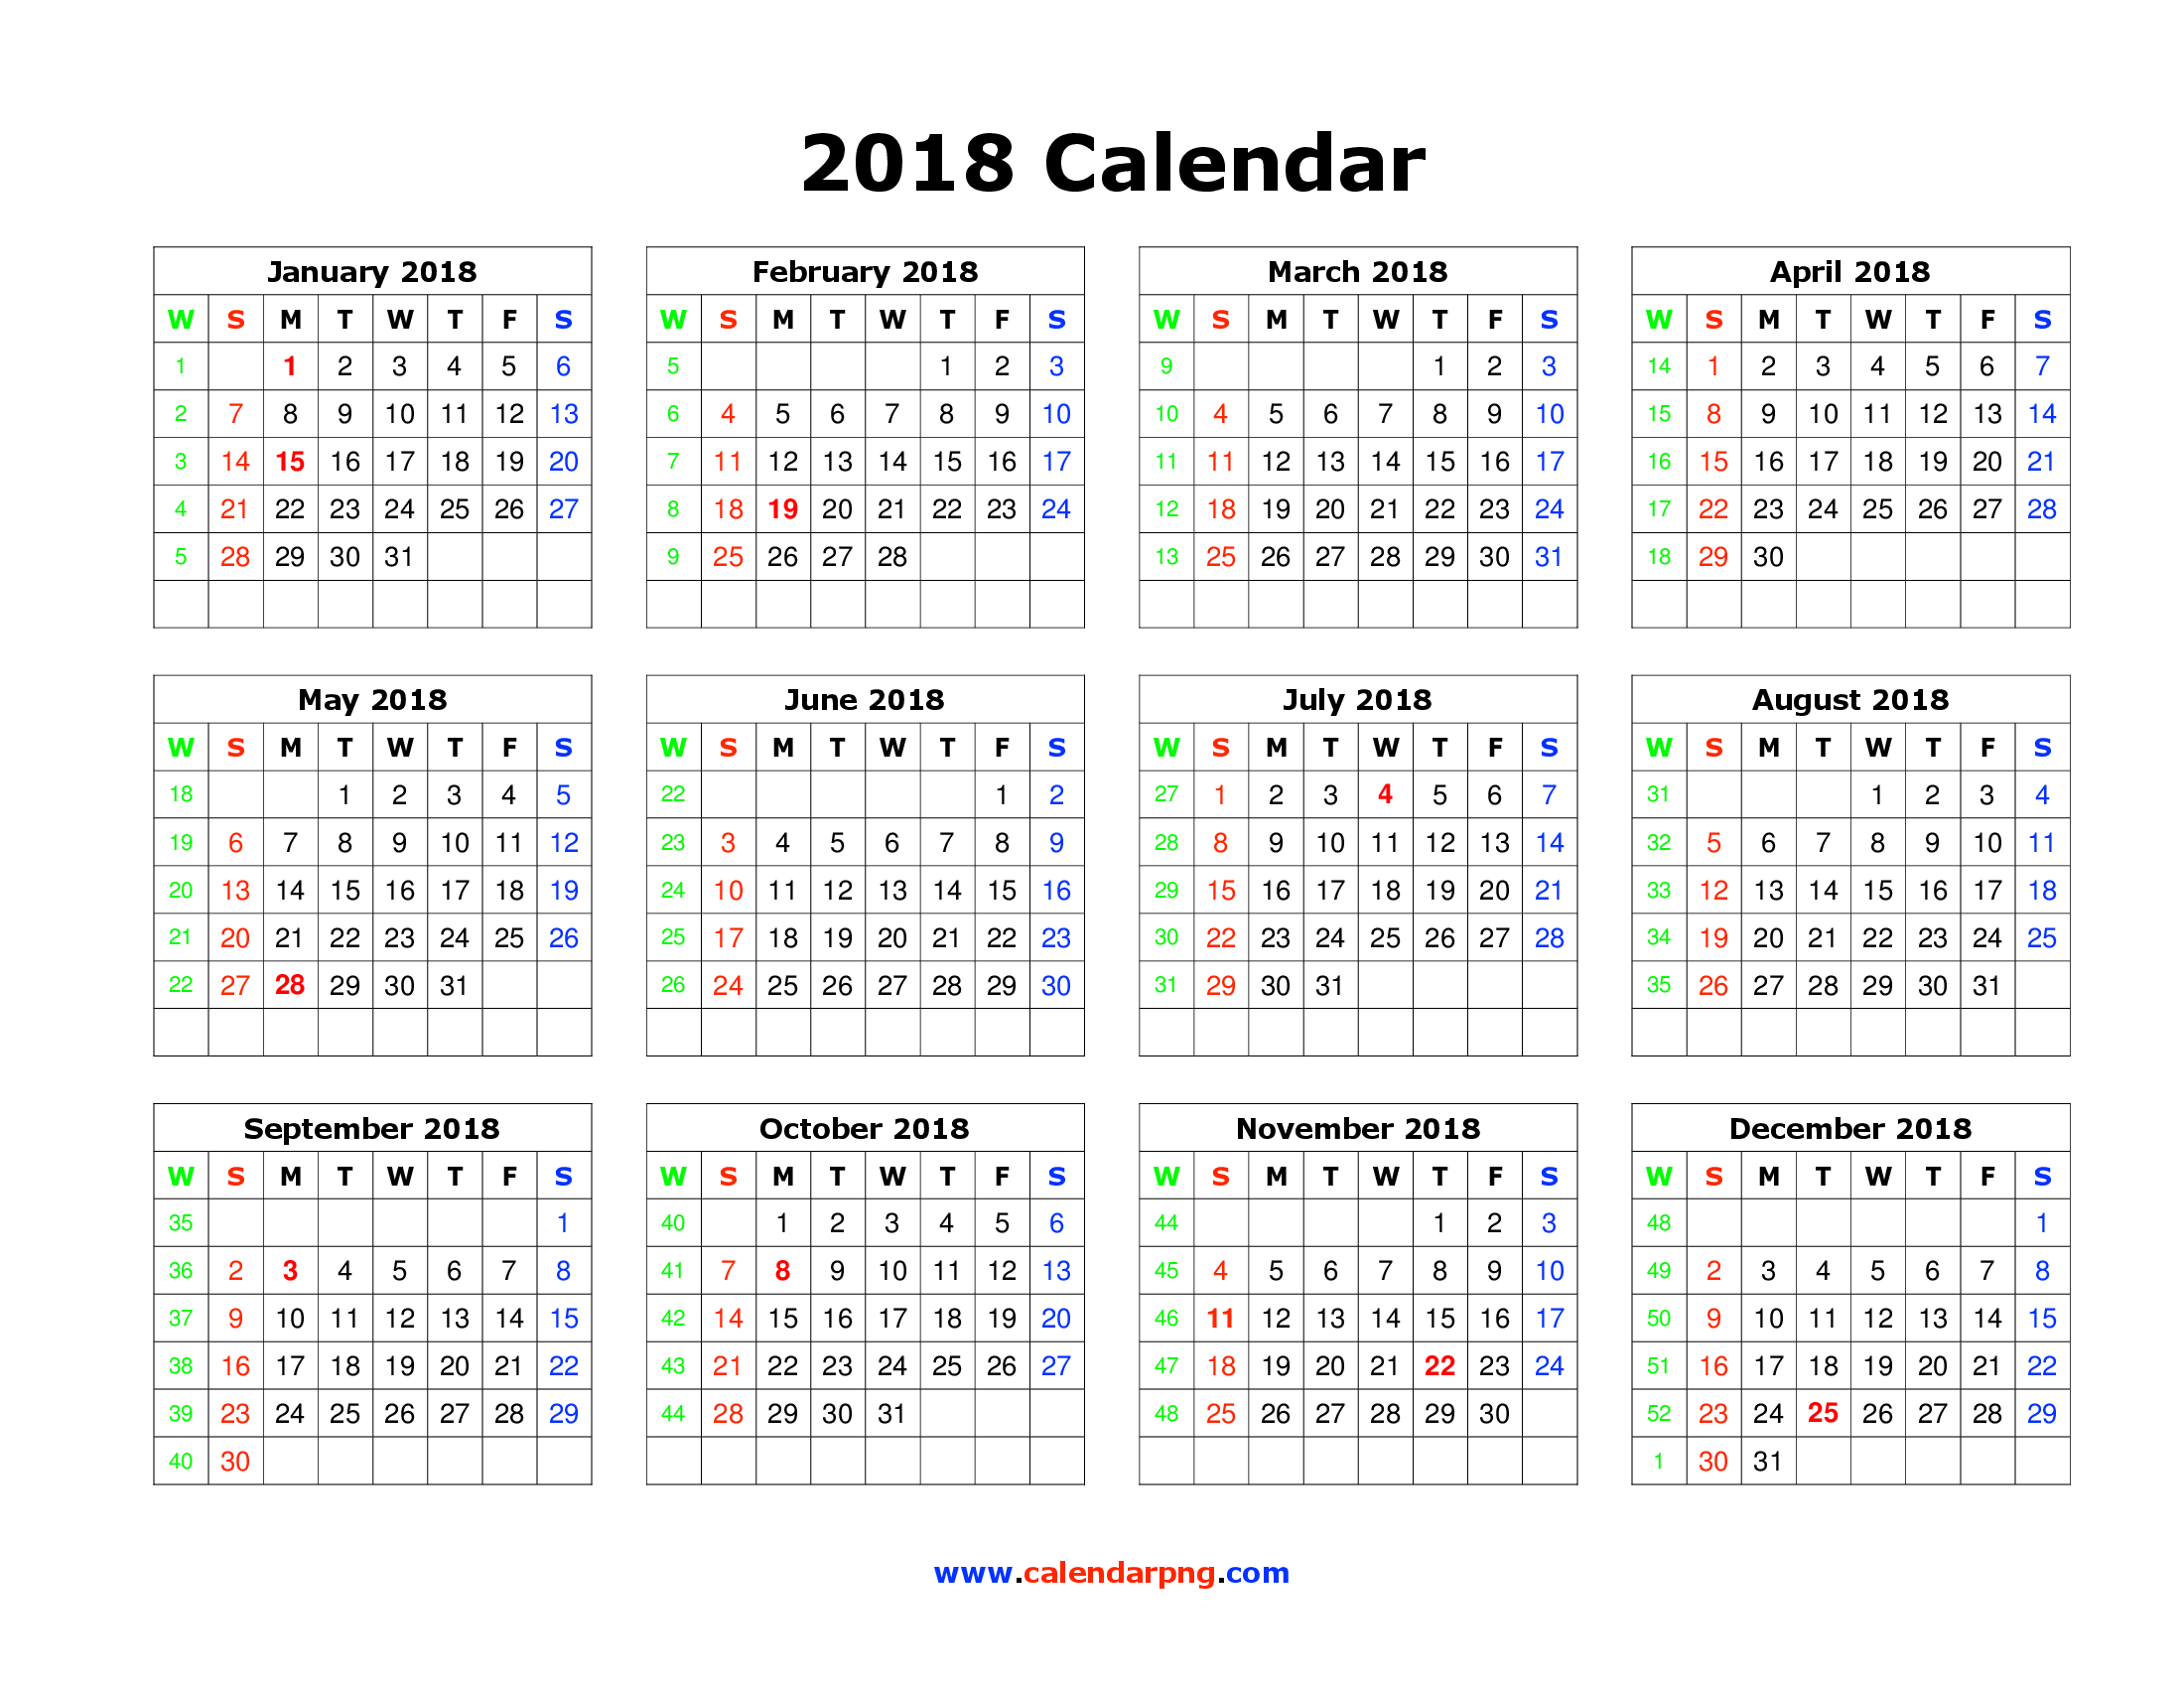 Calendar 2018 PNG Free Download